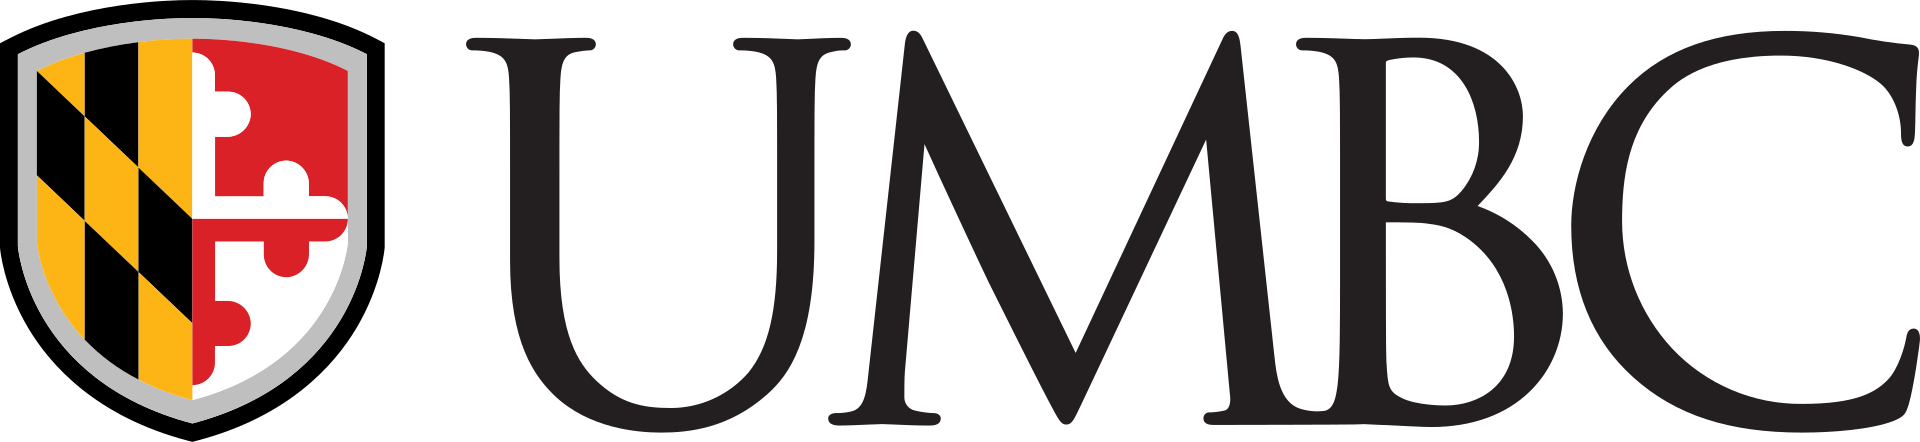 University of Maryland, Baltimore County (UMBC) logo, By University of Maryland, Baltimore County - http://styleguide.umbc.edu/logos/, 公共领域, http://commons.维基.org/w/index.php?curid = 67684930 "